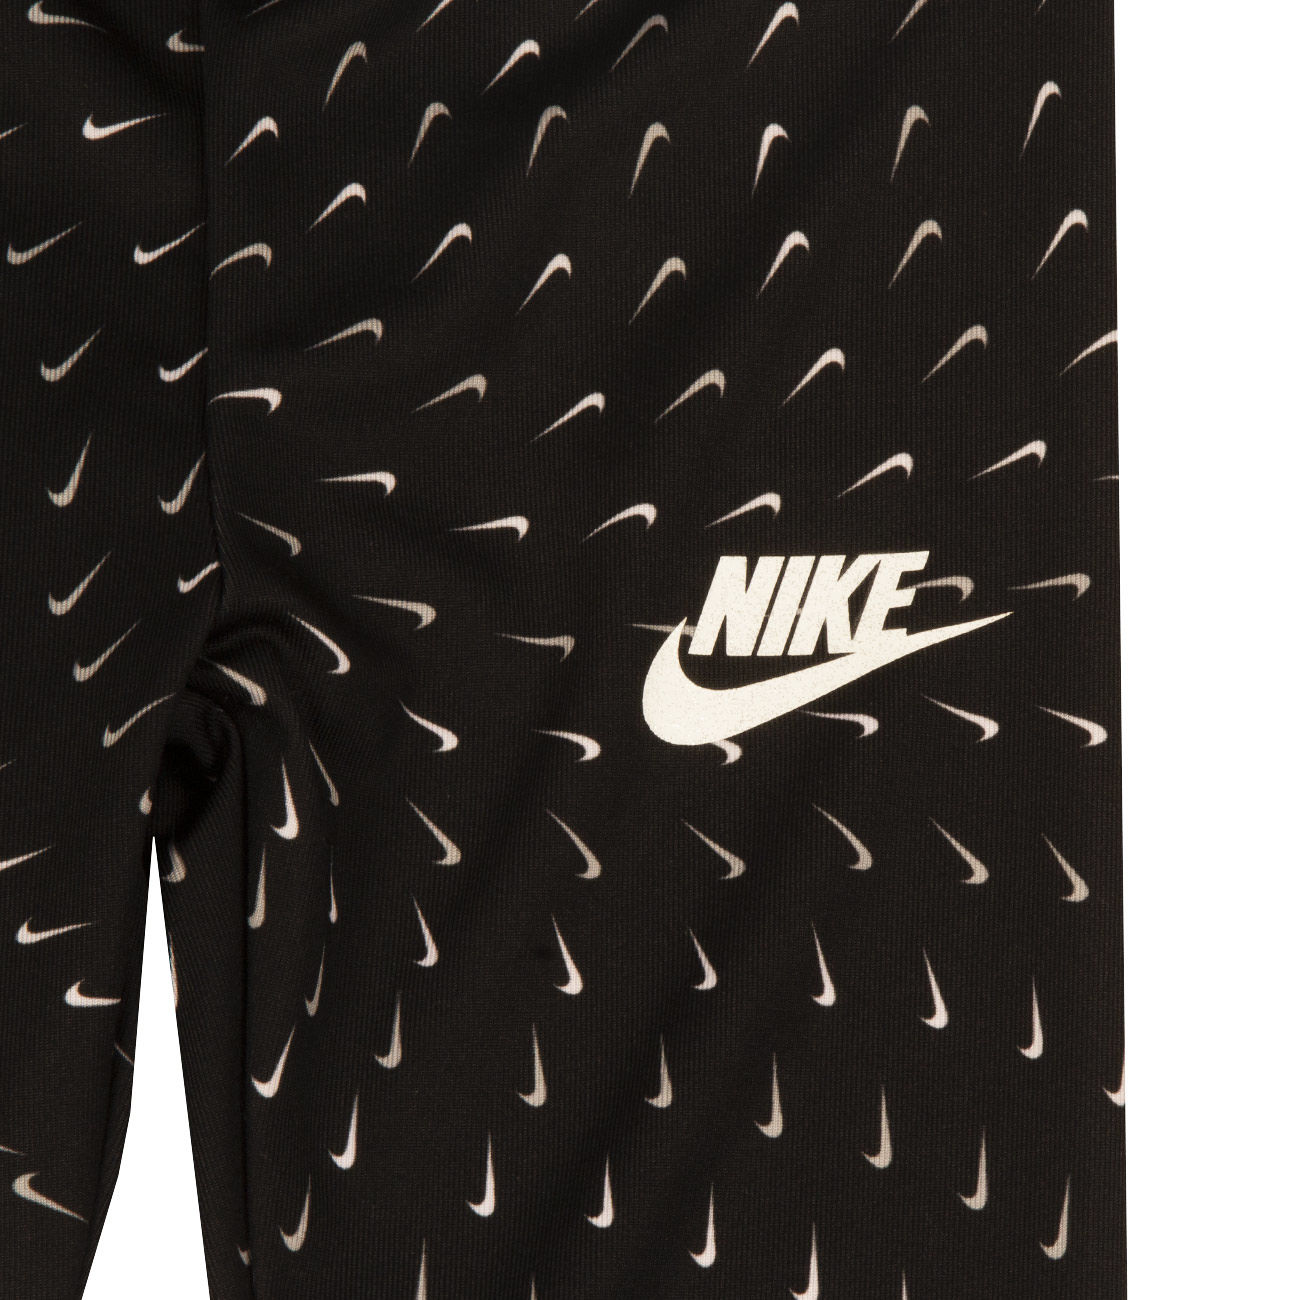 Nike leggings in black with swoosh print